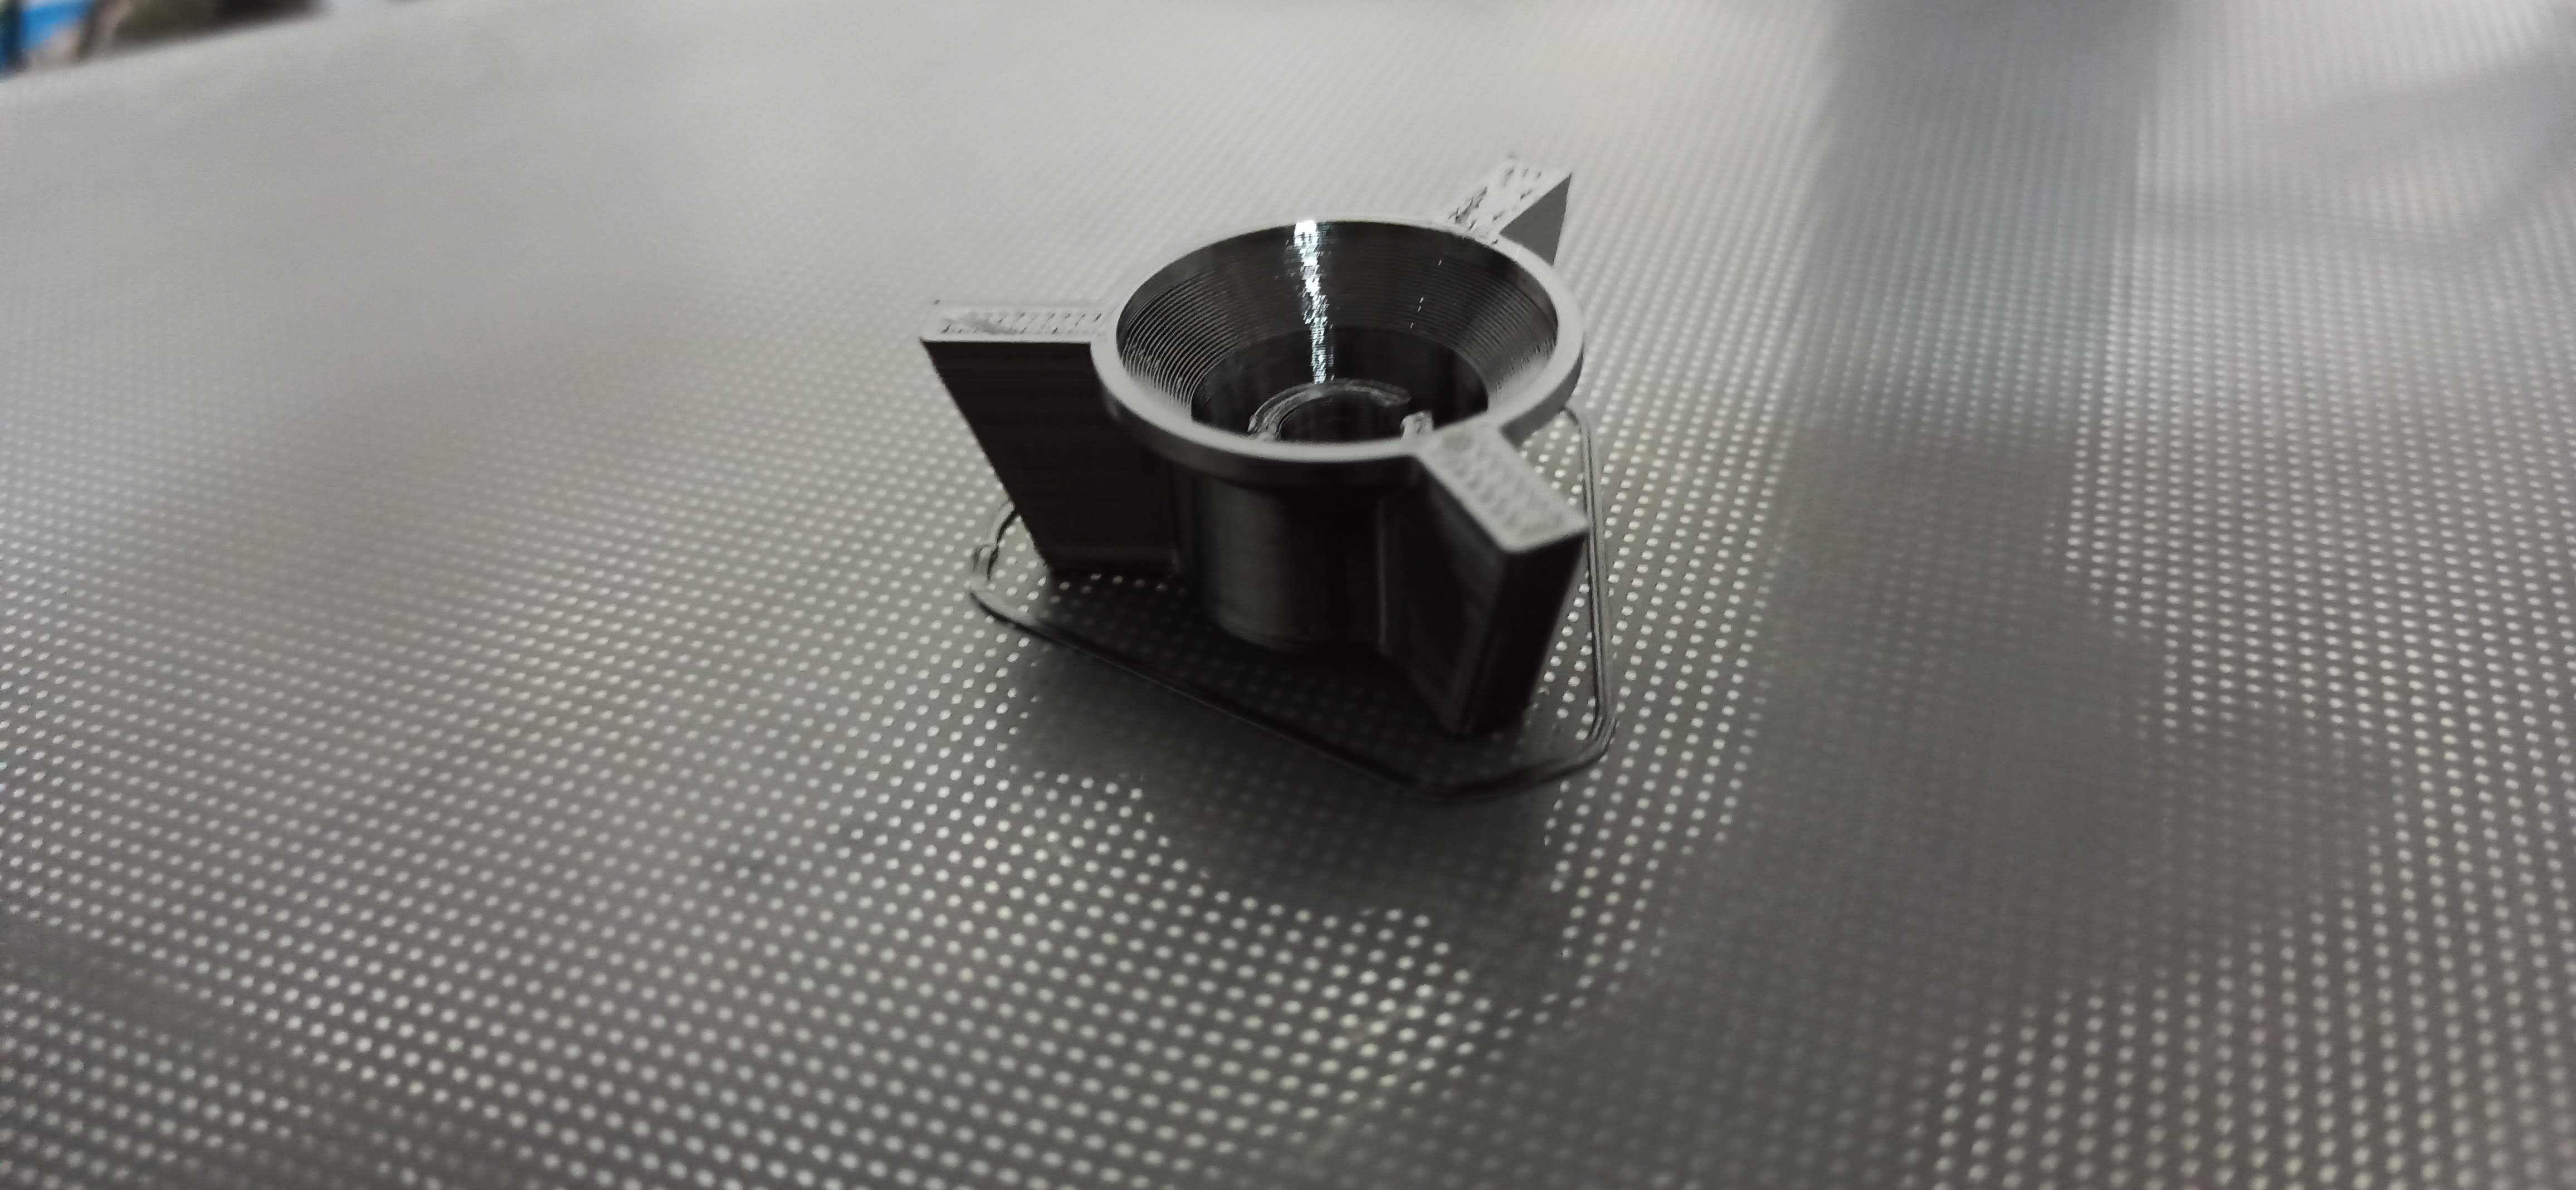 Ender 3 V2 printer control knob